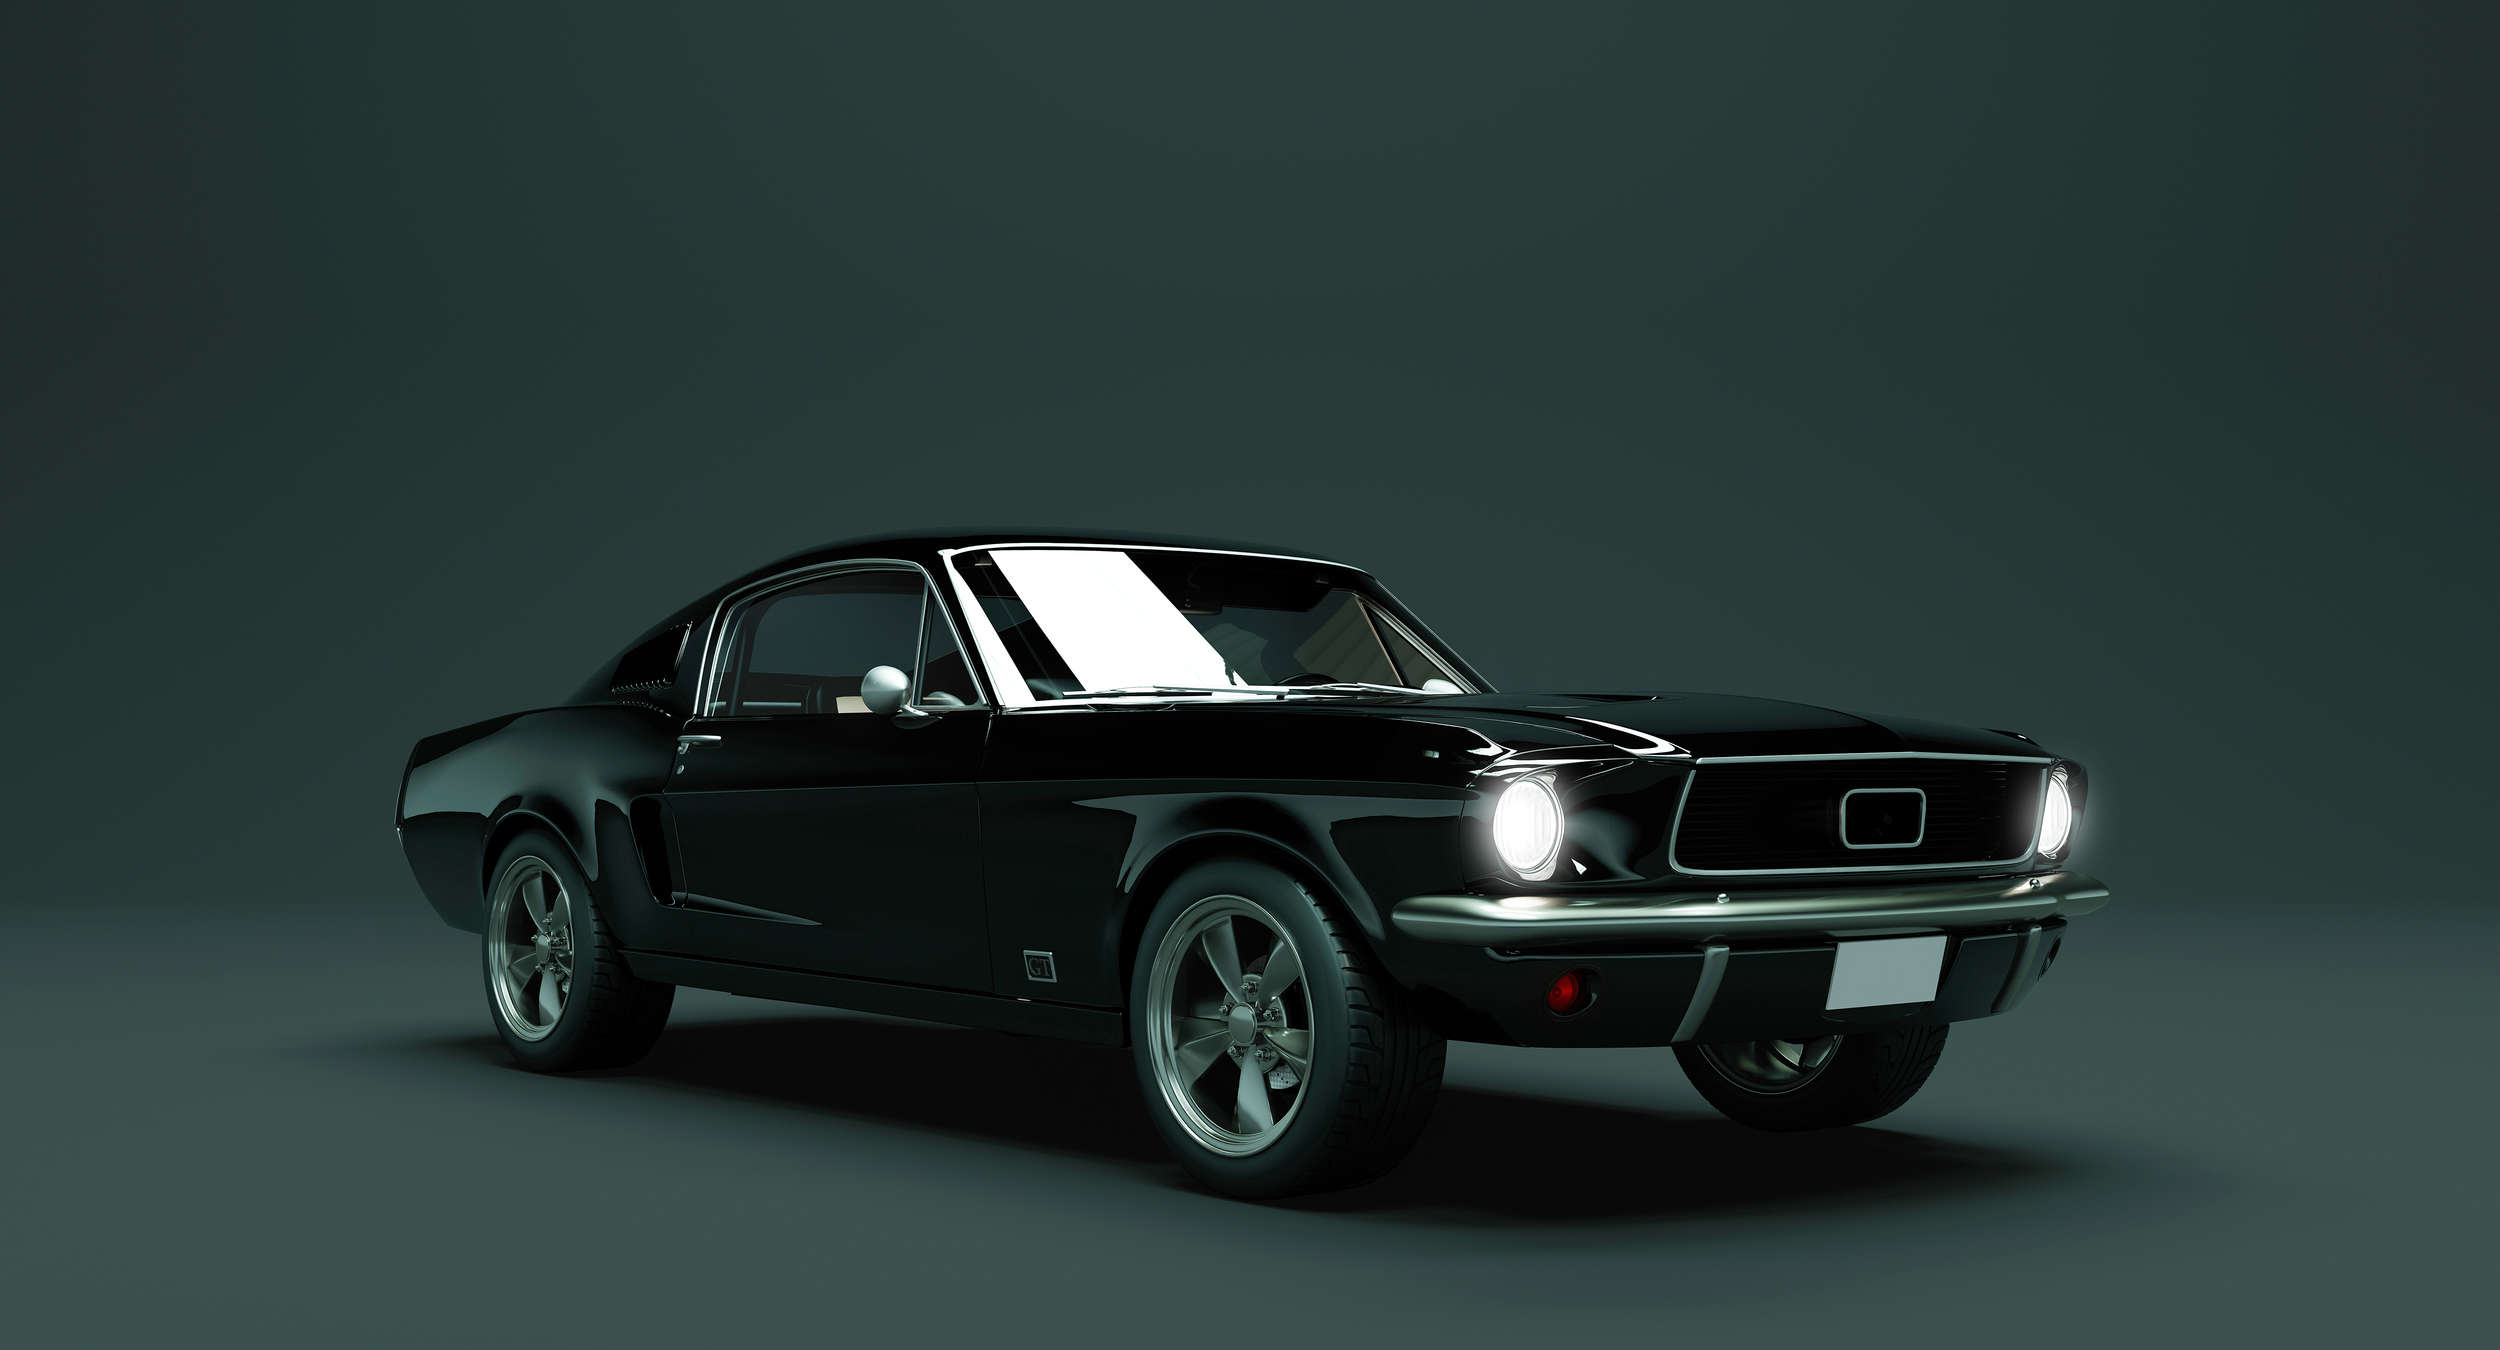             Mustang 2 - Fotomural, Mustang 1968 Vintage Car - Azul, Negro | Tejido sin tejer texturado
        